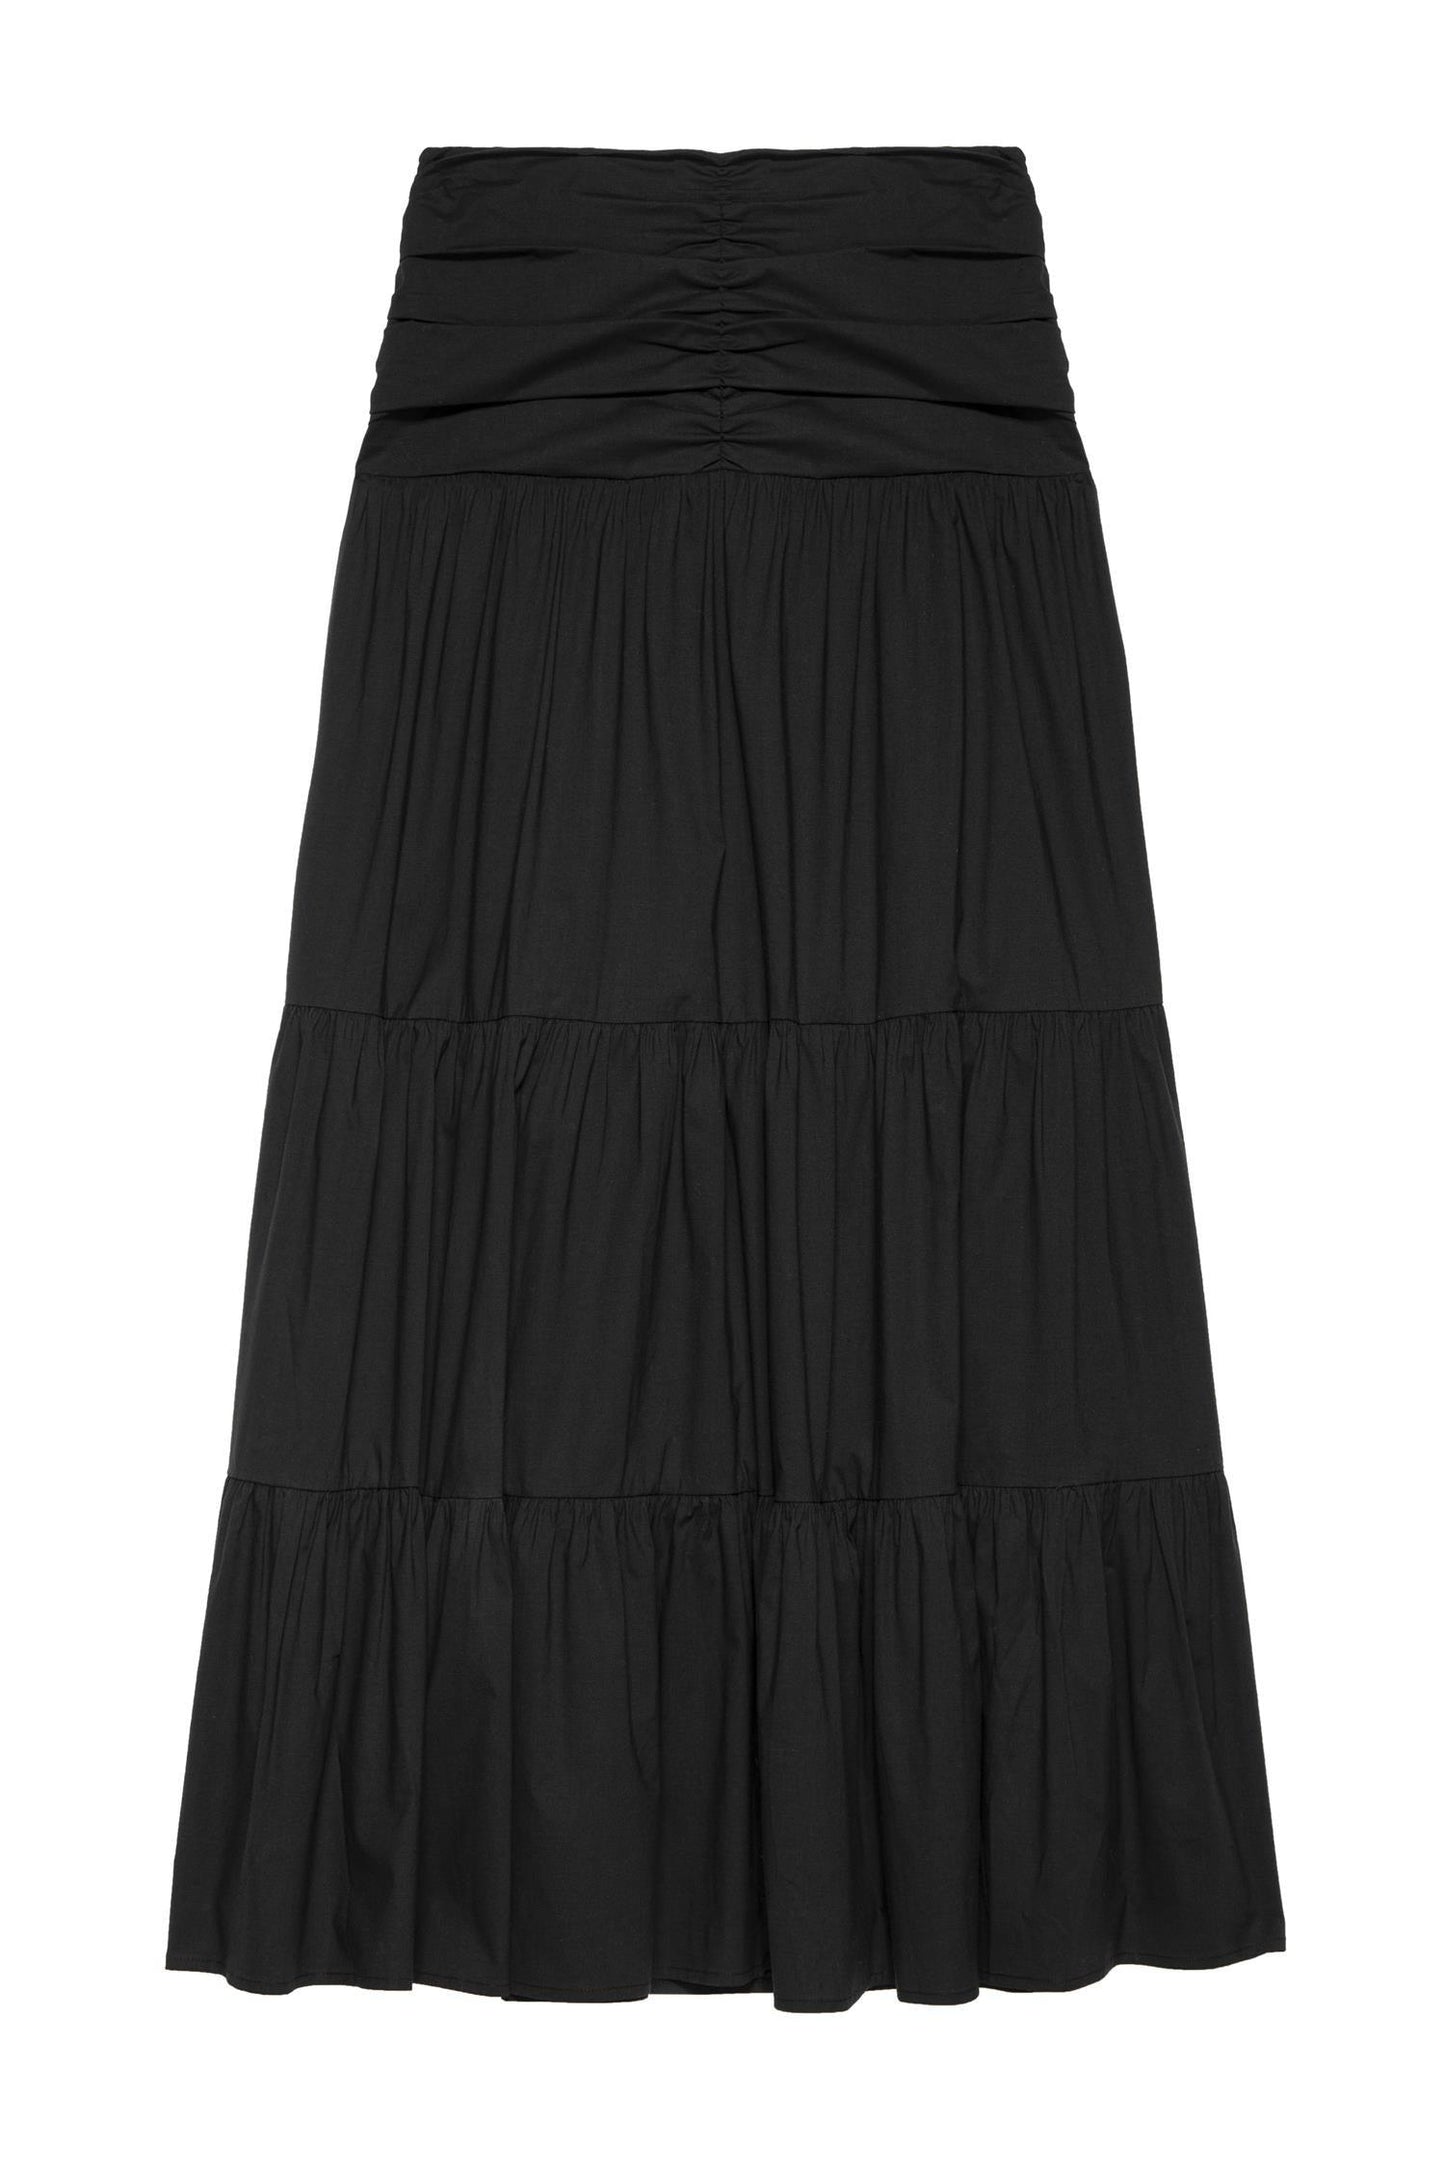 Agatha Skirt Black - No22 Damplassen